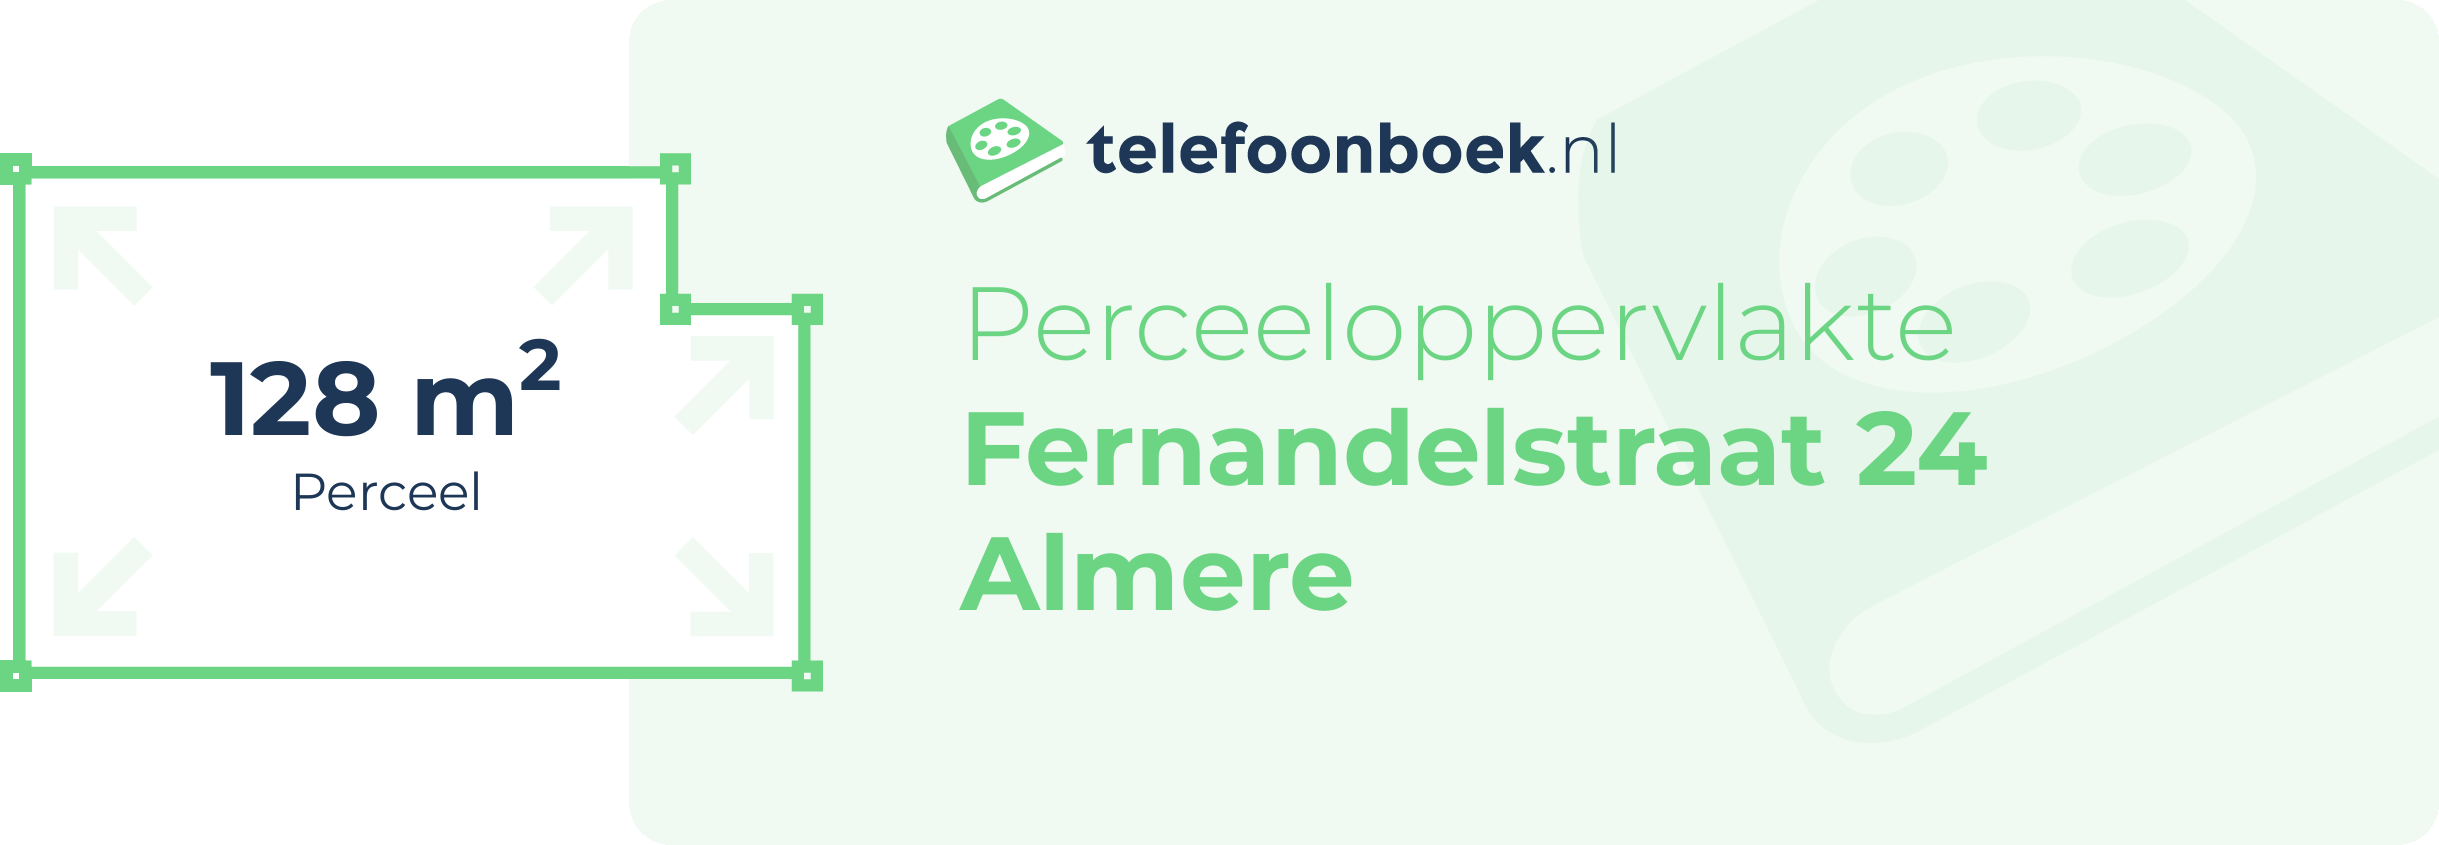 Perceeloppervlakte Fernandelstraat 24 Almere